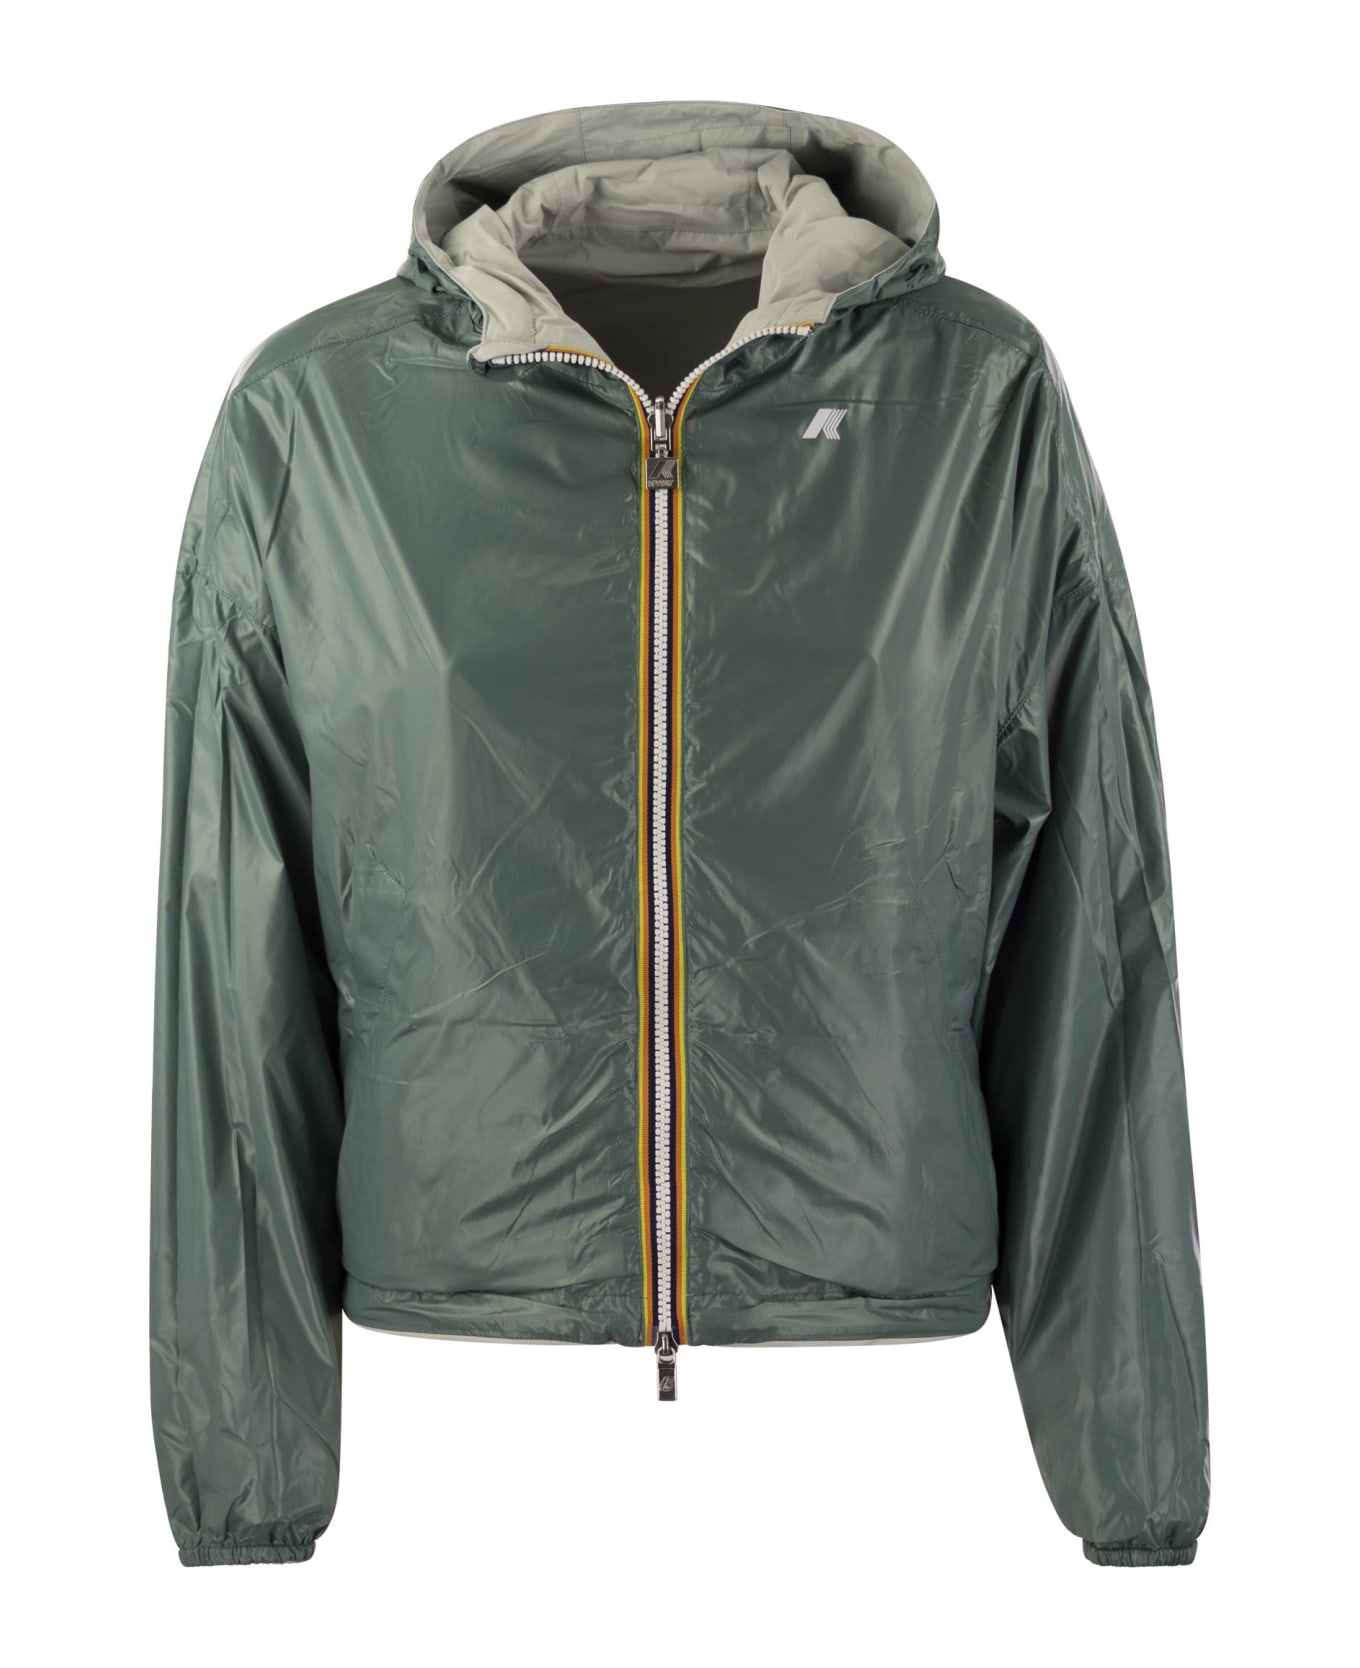 K-Way Laurette Plus - Reversible Hooded Jacket - Light Green/dark Green ジャケット